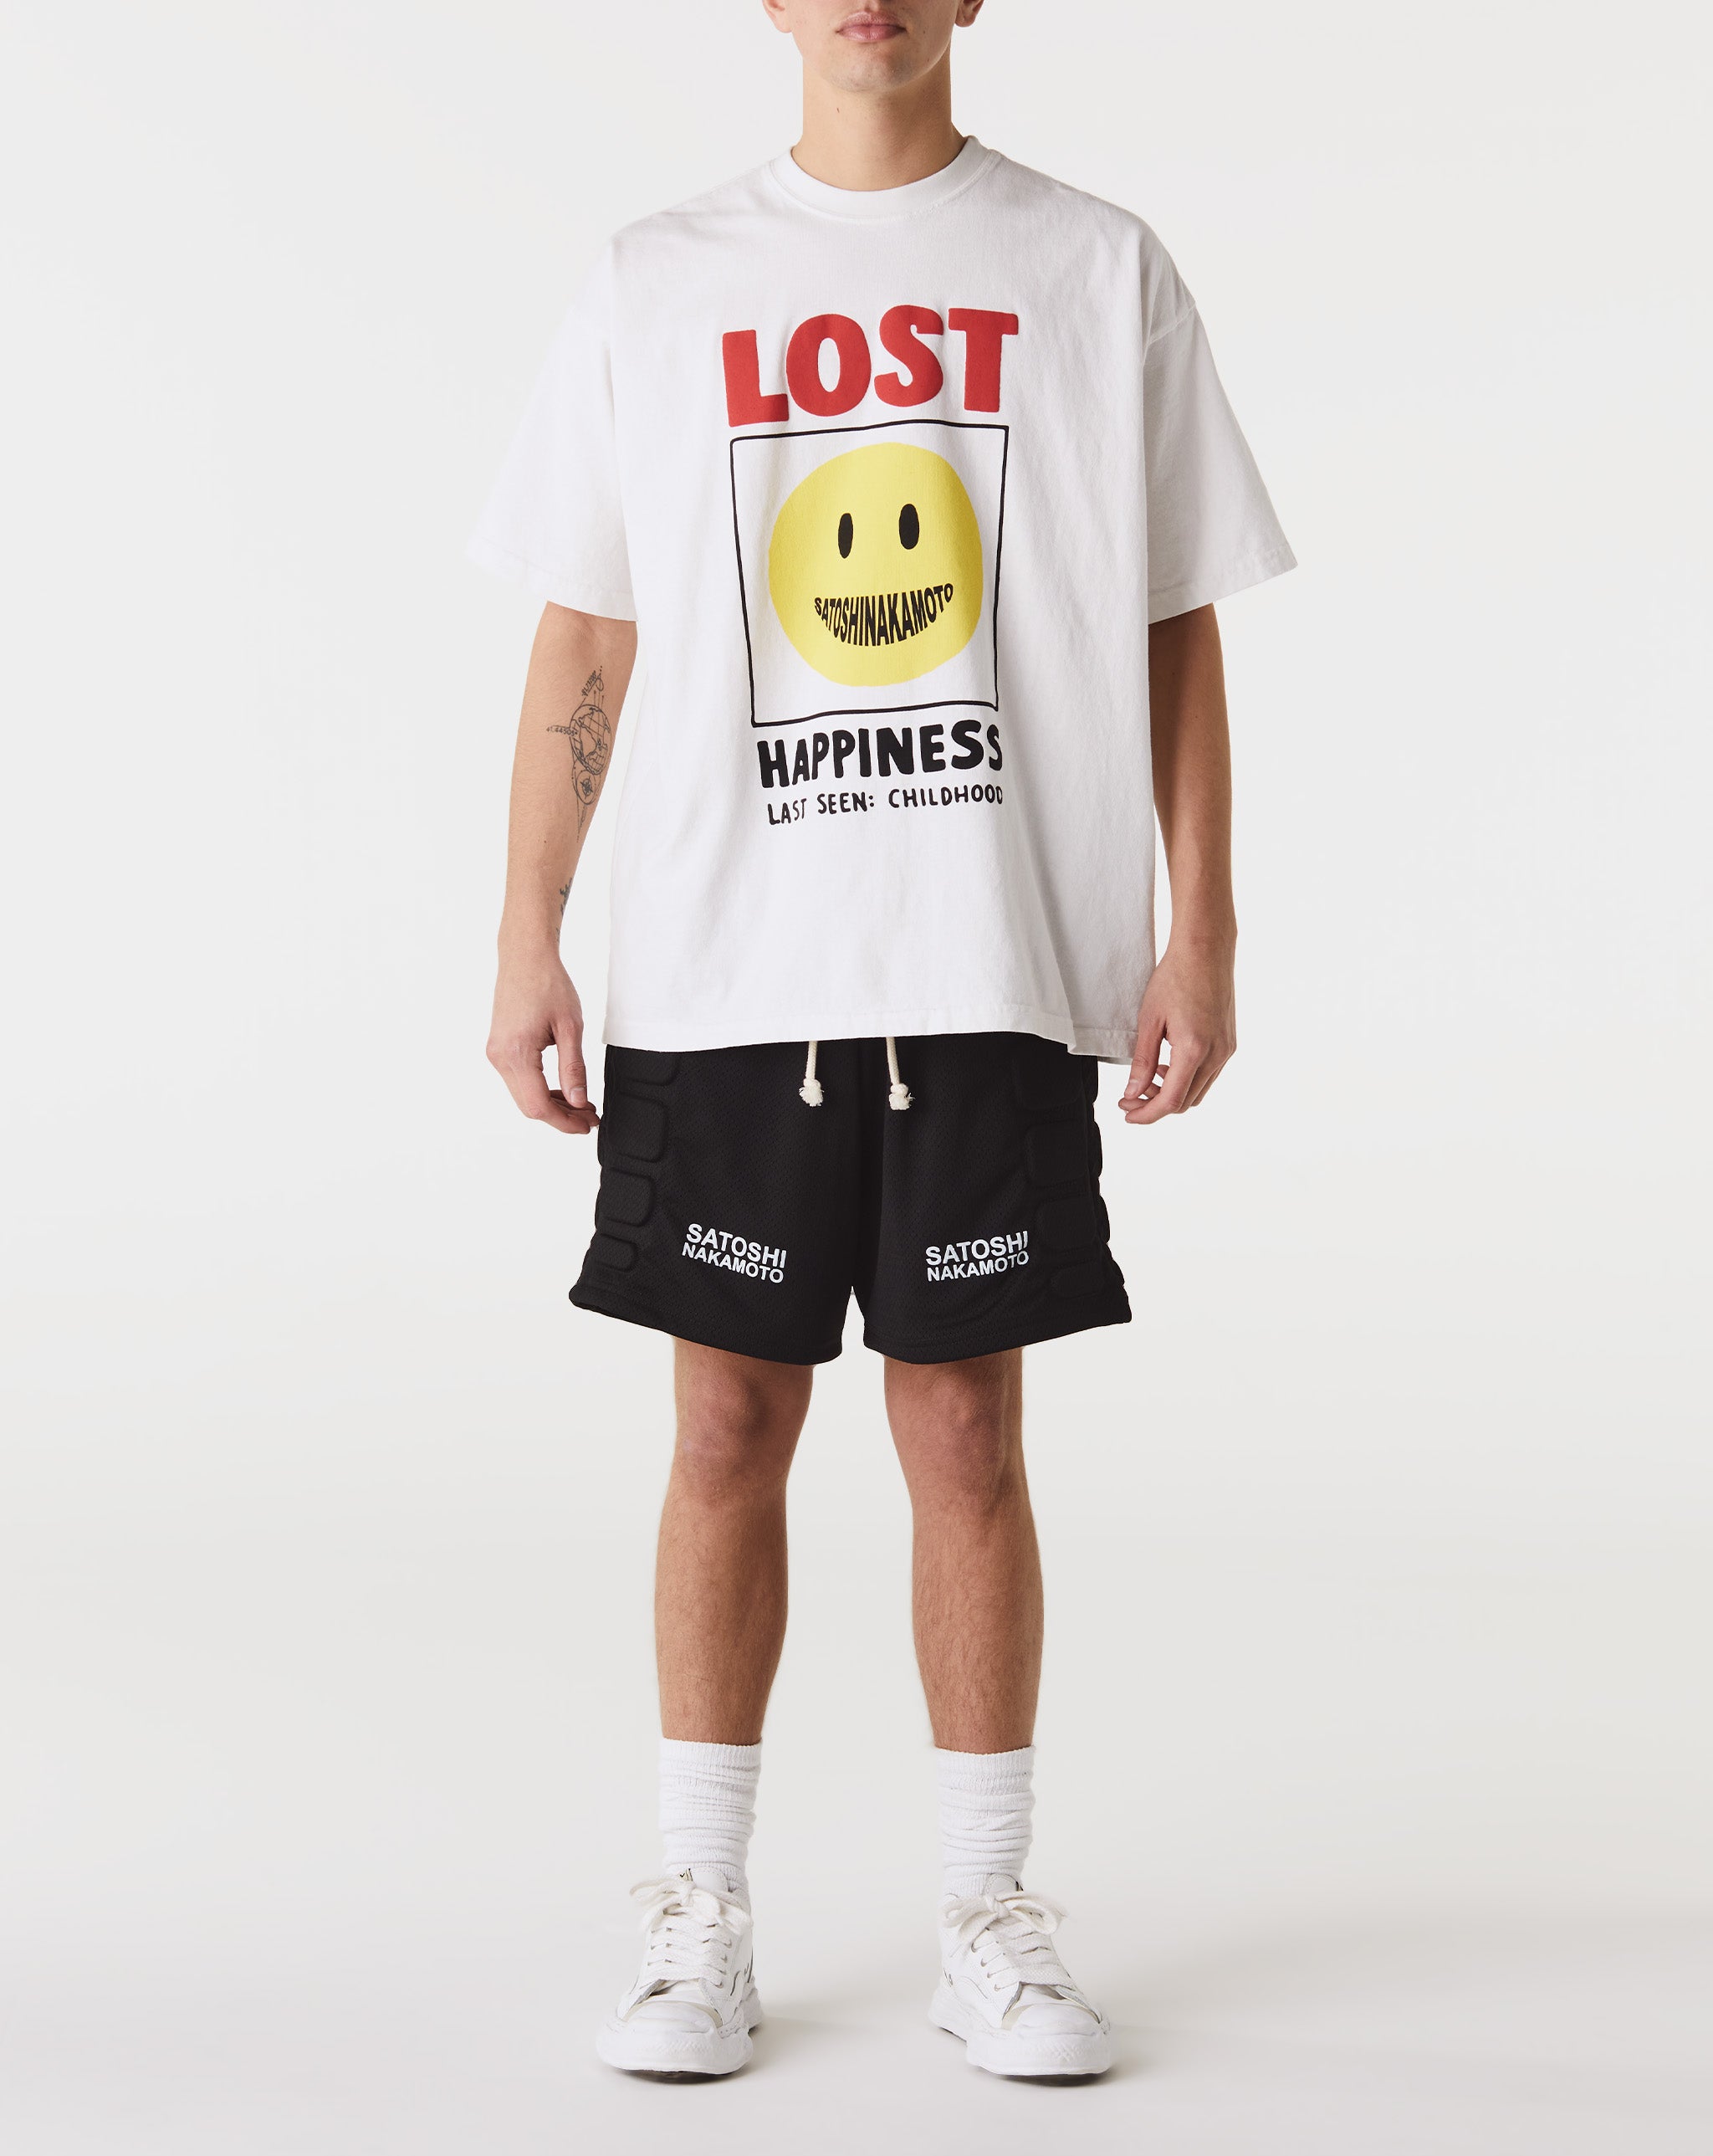 Satoshi Nakamoto Lost Happiness T-Shirt  - Cheap 127-0 Jordan outlet